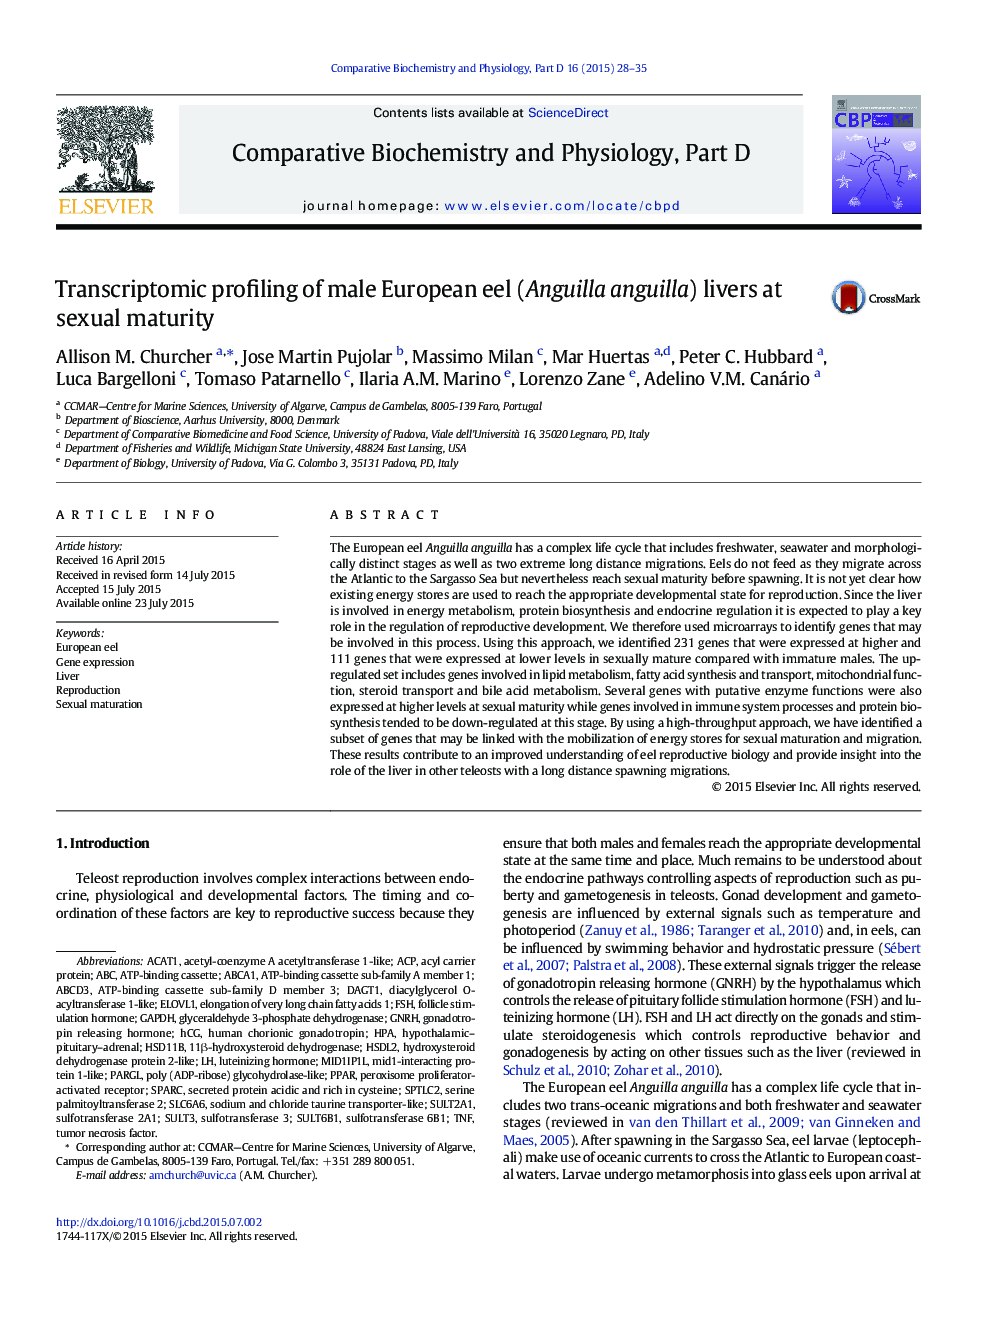 Transcriptomic profiling of male European eel (Anguilla anguilla) livers at sexual maturity